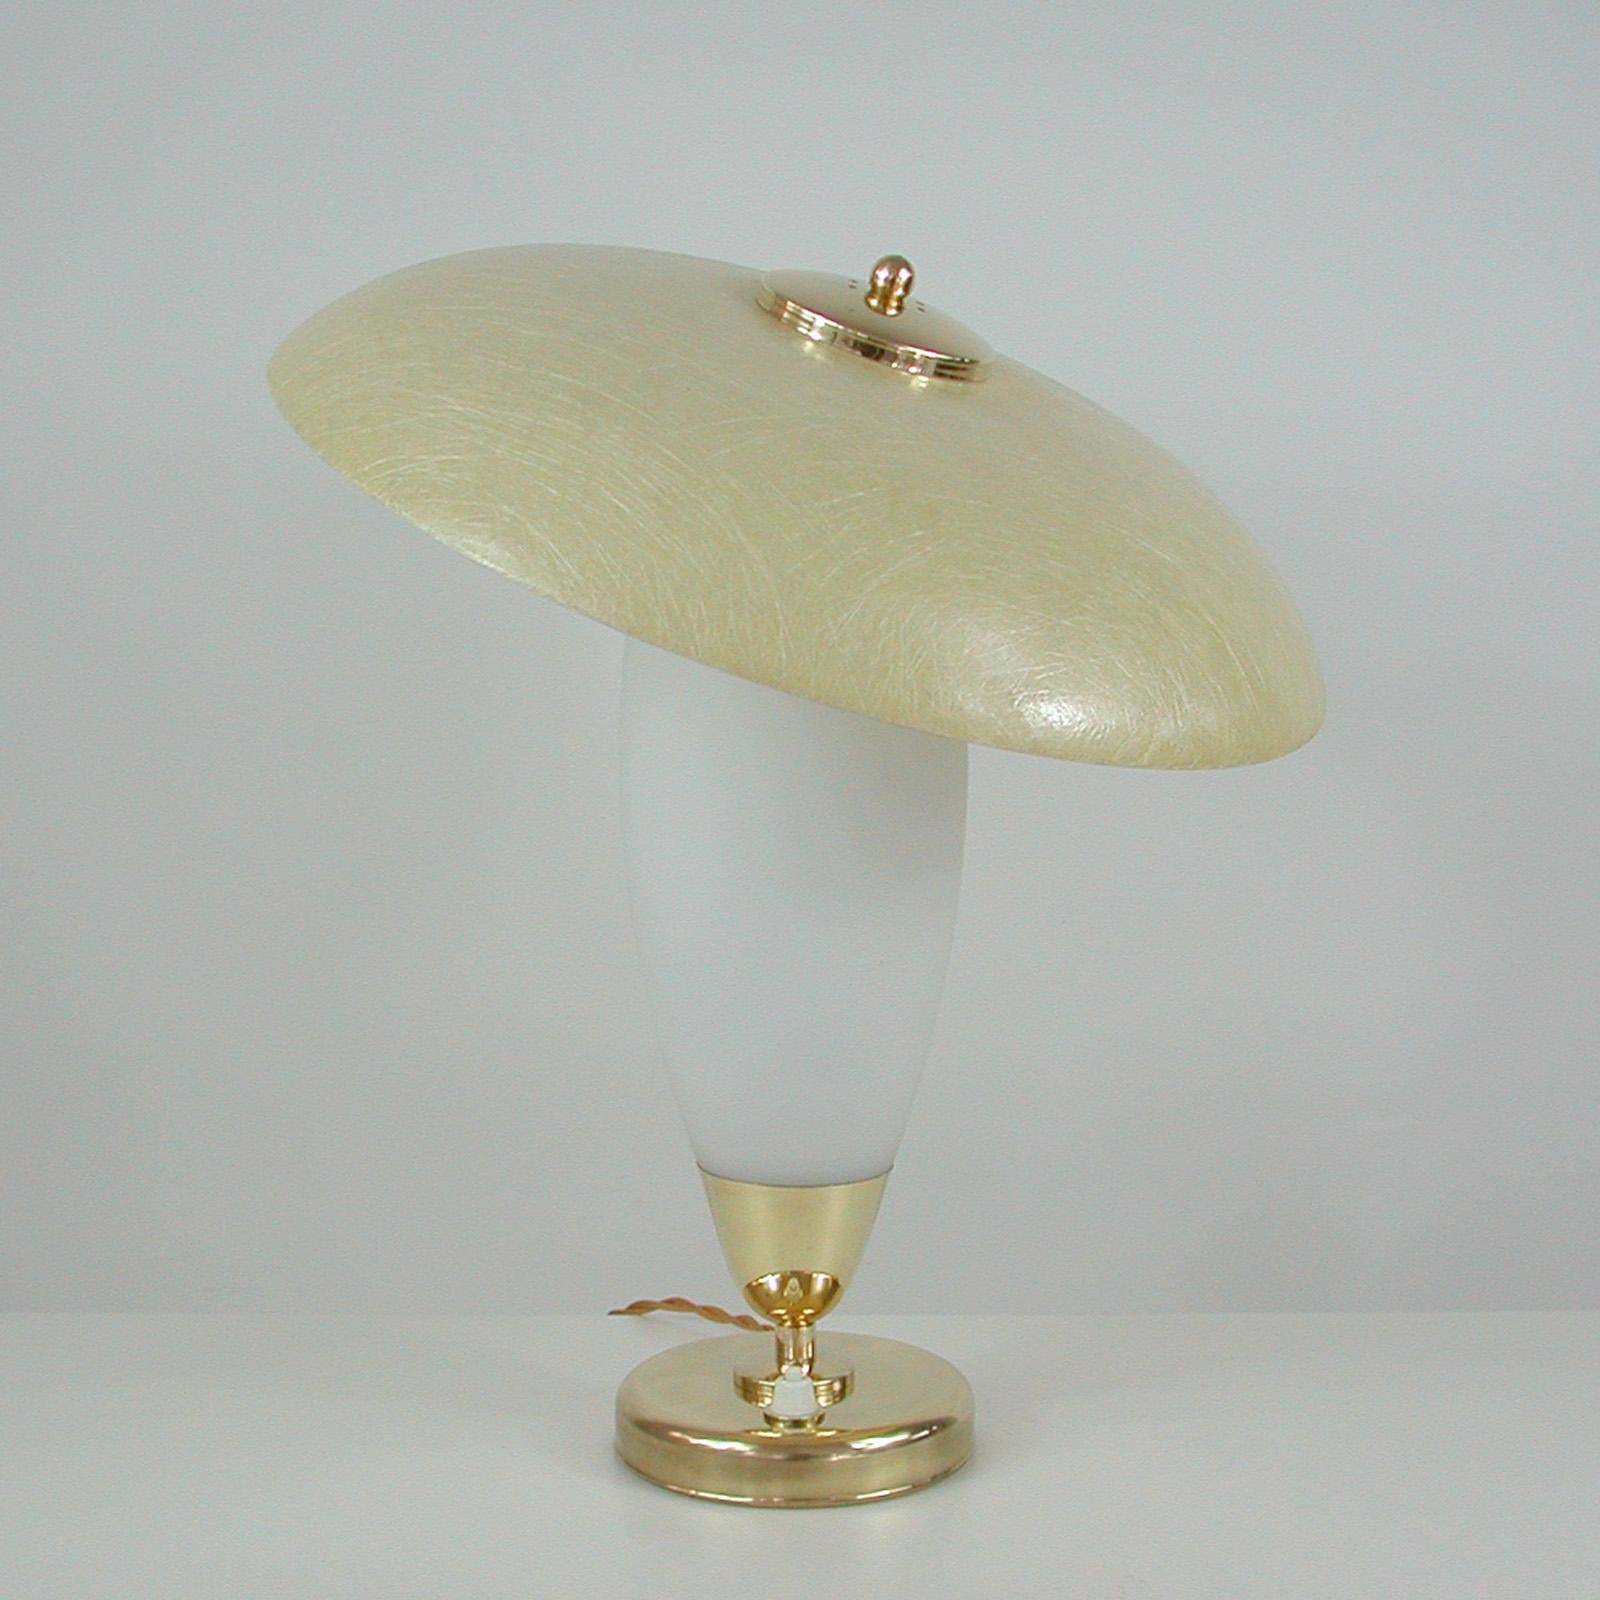 Midcentury Swedish Modern Brass, Opaline and Fiberglass Saucer Table Lamp, 1950s For Sale 2